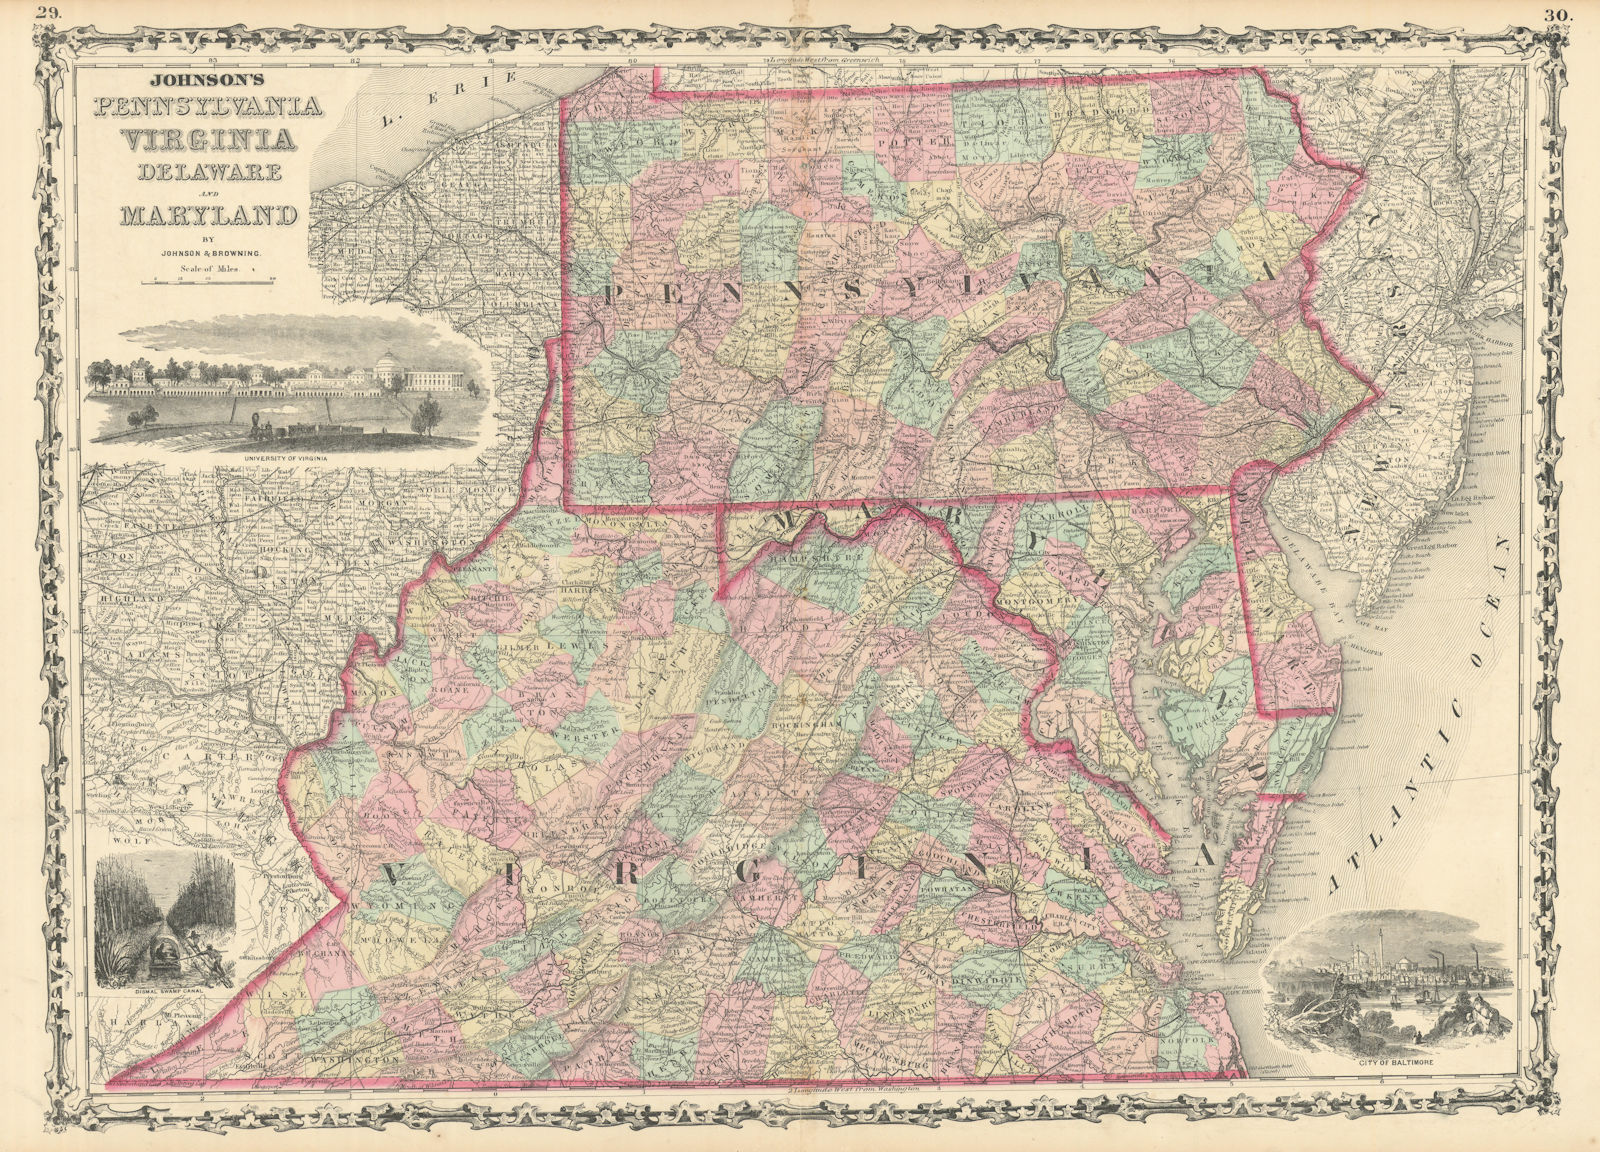 Johnson's Pennsylvania, Virginia, Delaware & Maryland. US state map 1861